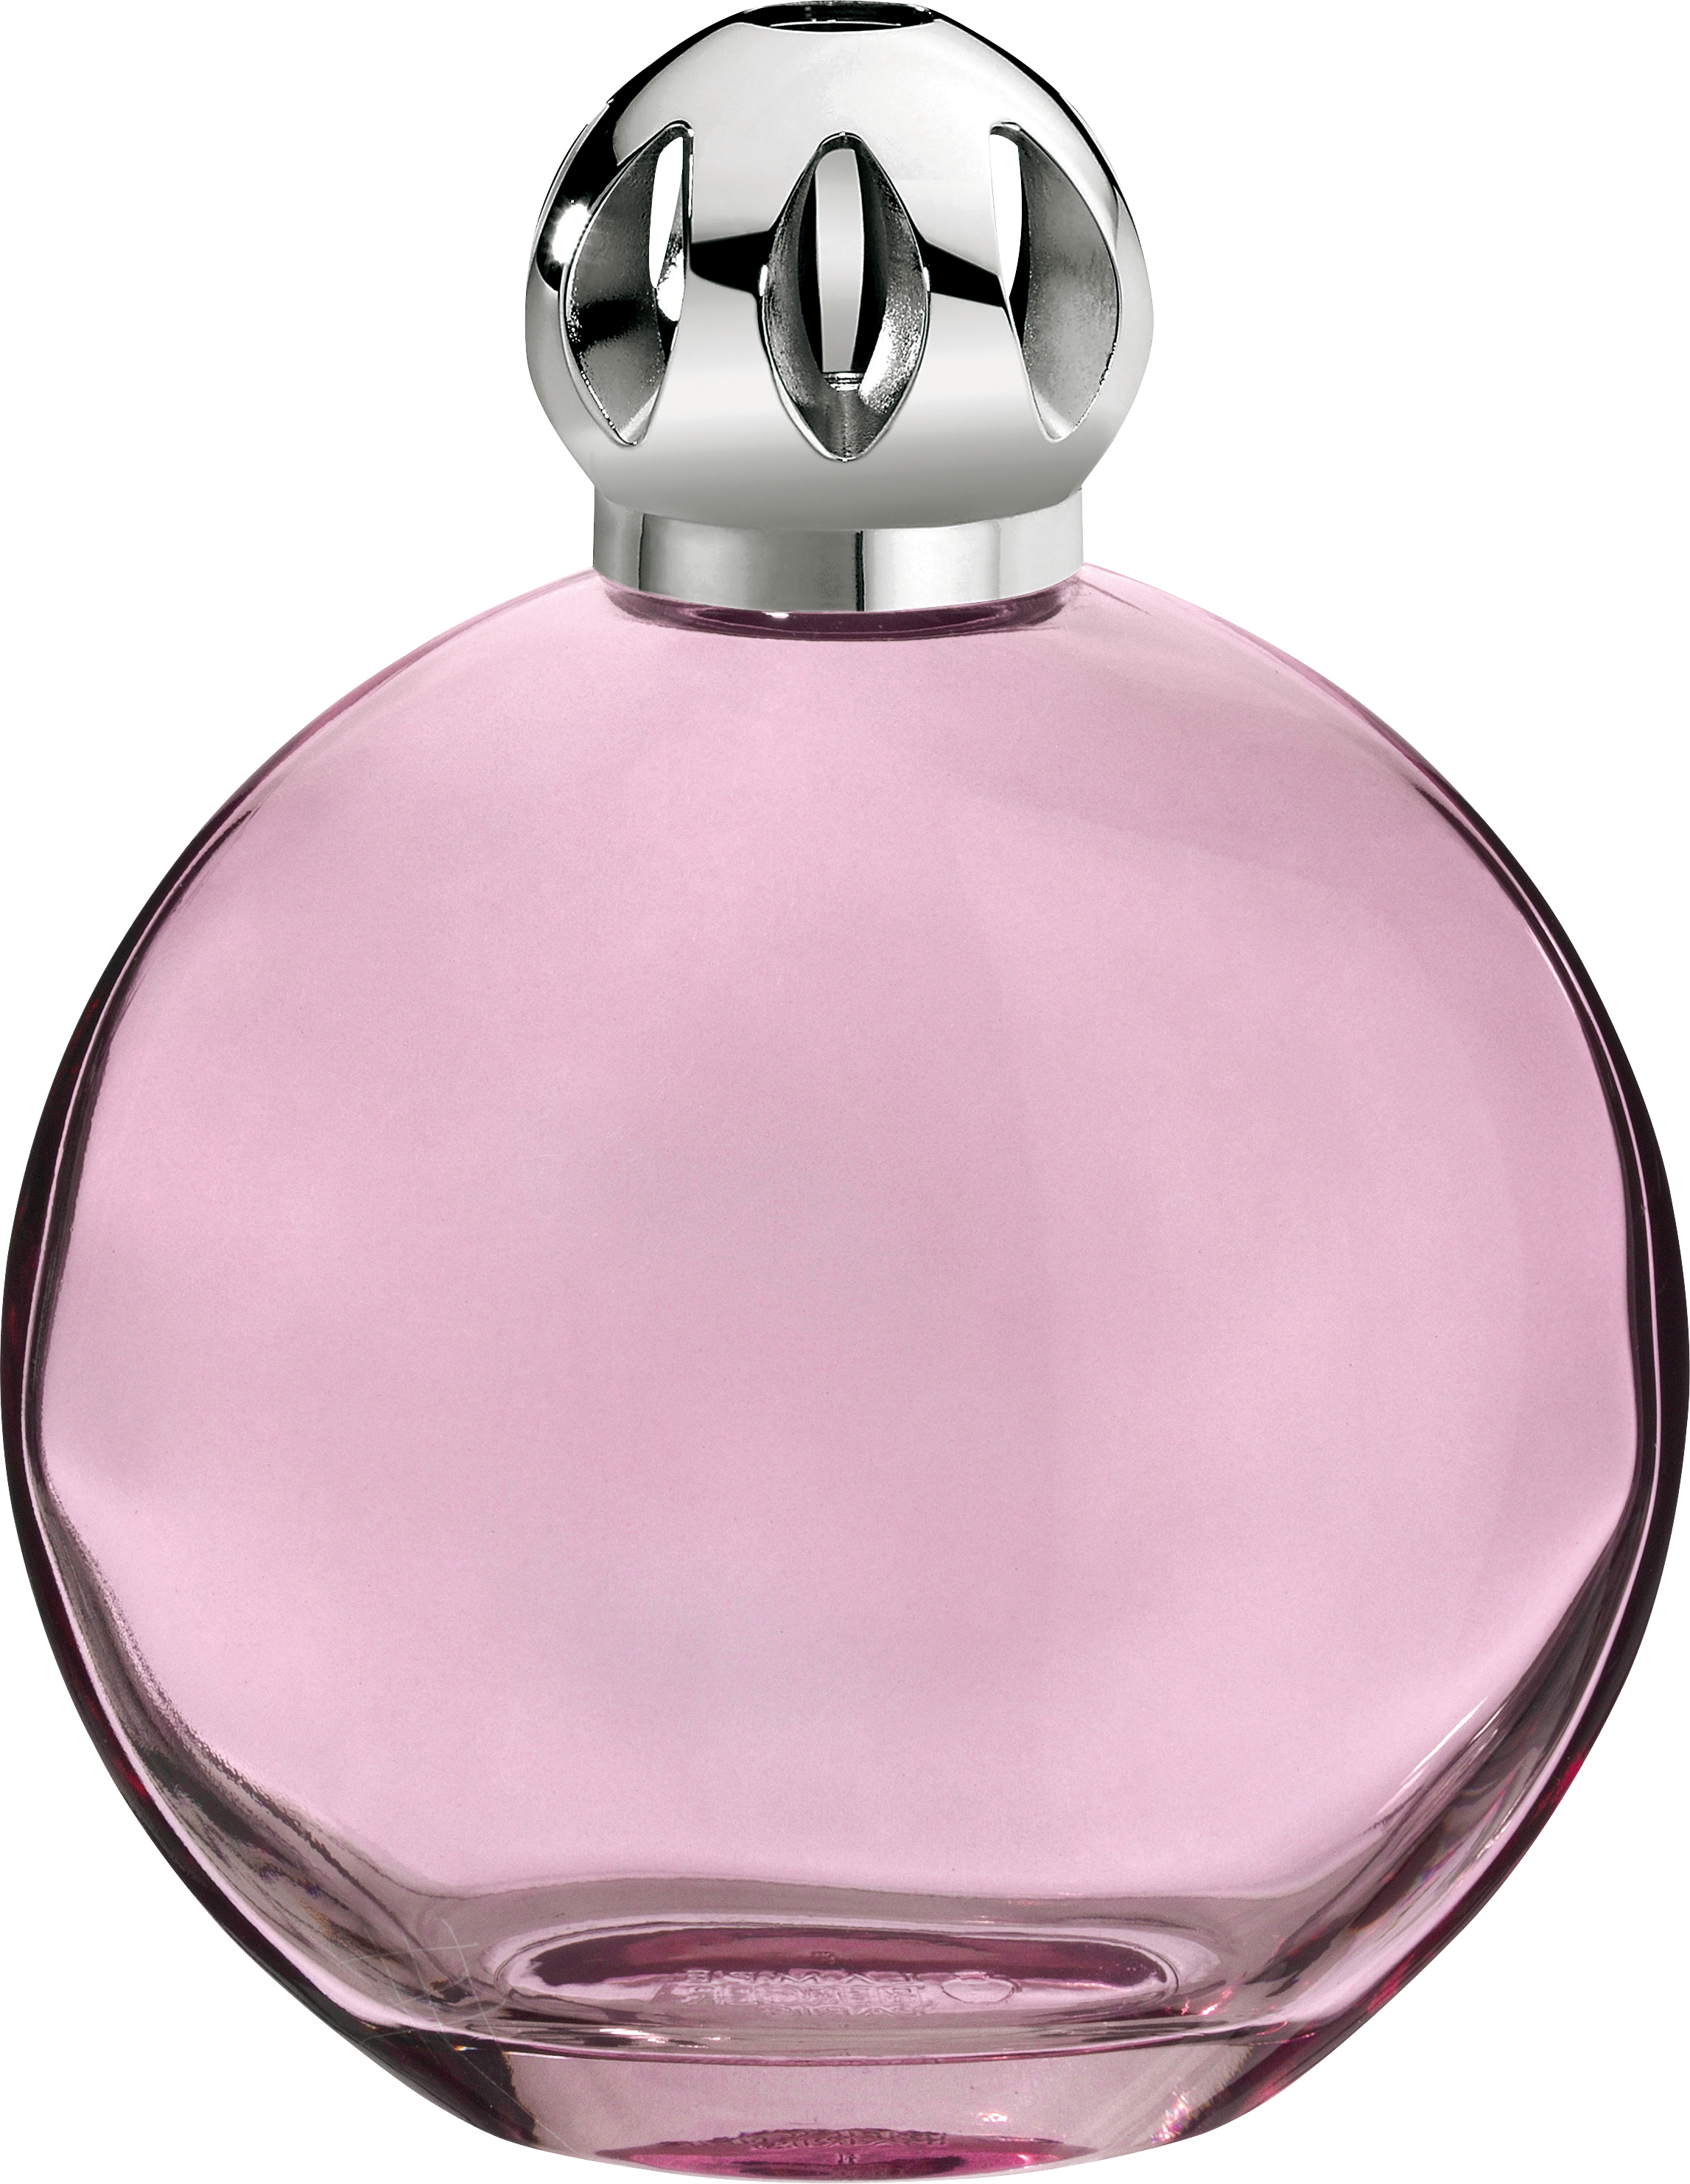 Perfume Bottles Clipart Transparent Background, Modern 3d Perfume Bottle  Design Vector, 3d Perfume Bottle, Perfume Bottle, Fragrance PNG Image For  Free Download